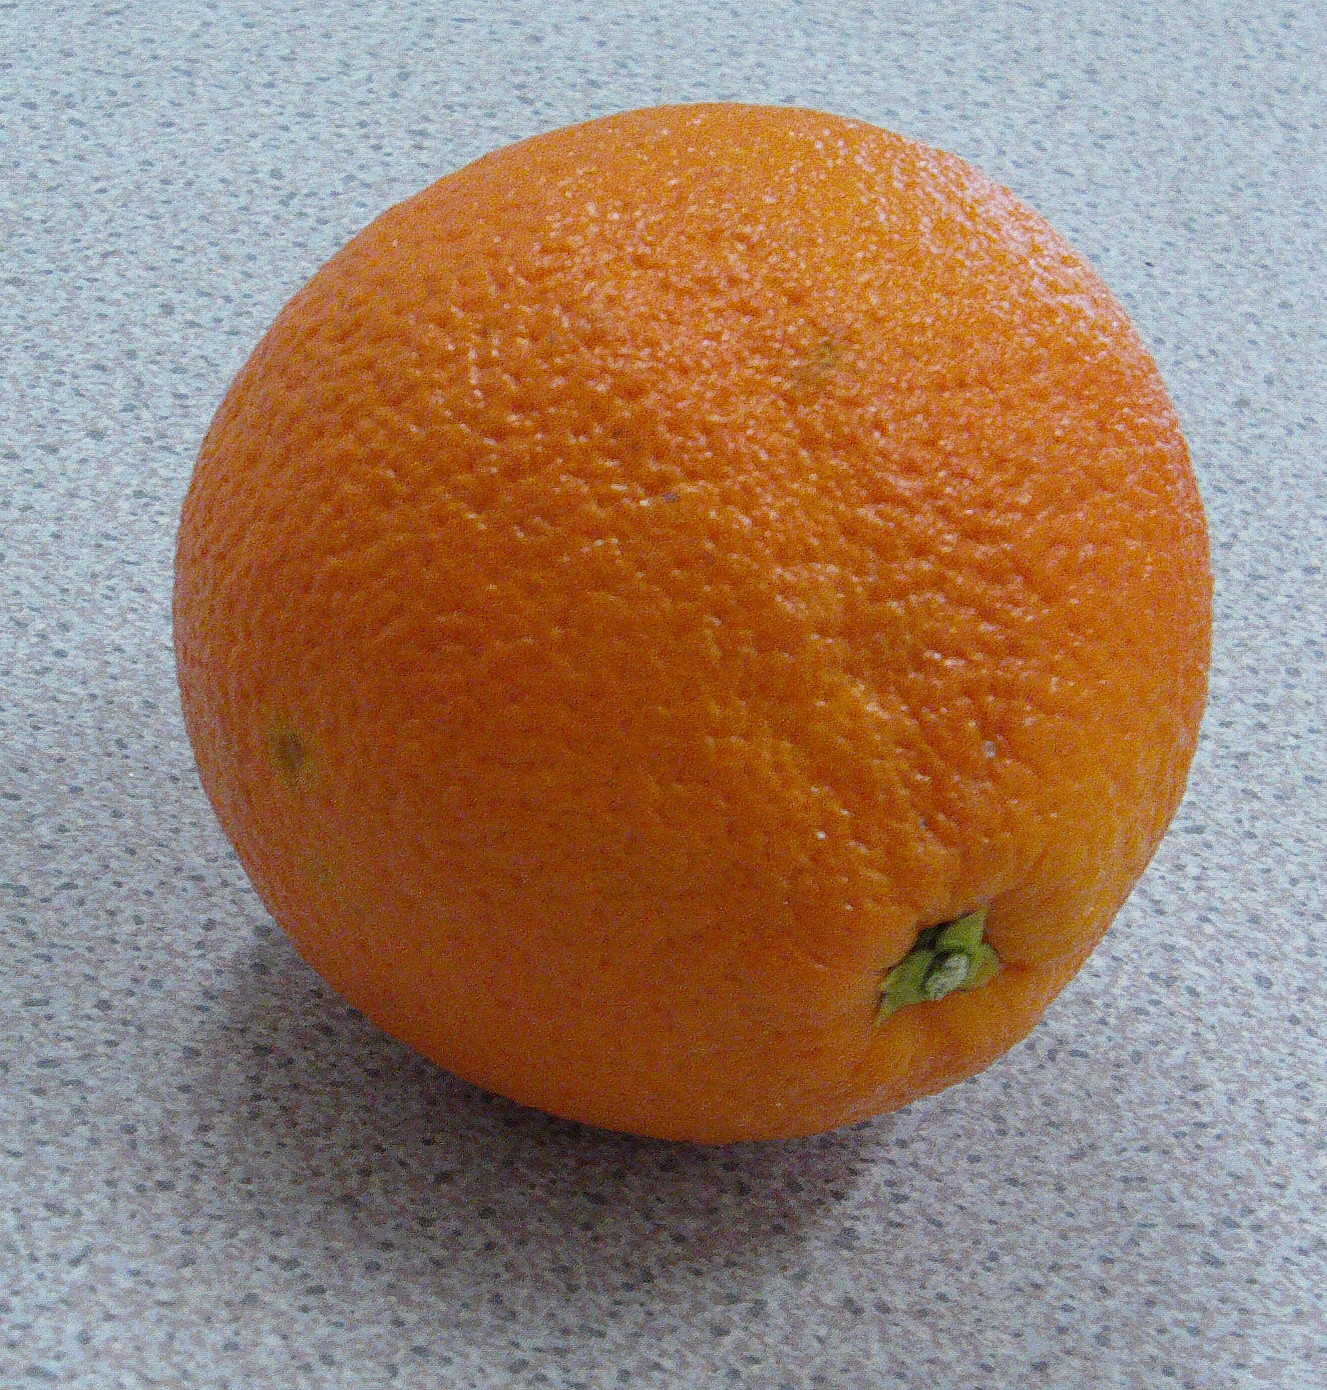 Photos of oranges - Richard North